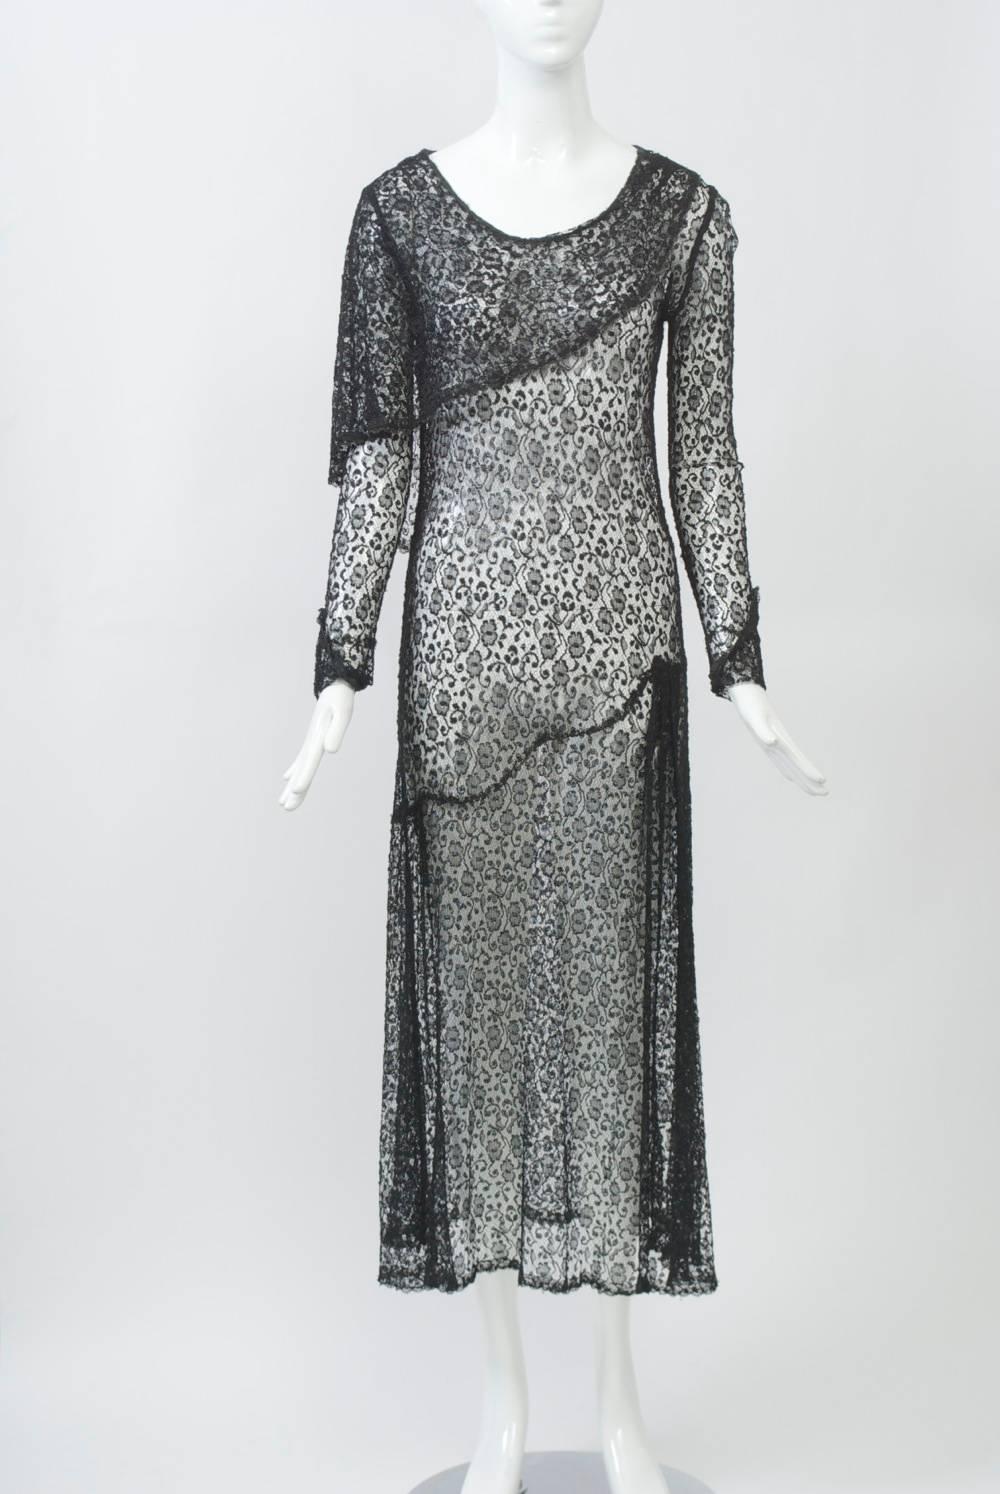 1930s tea dress